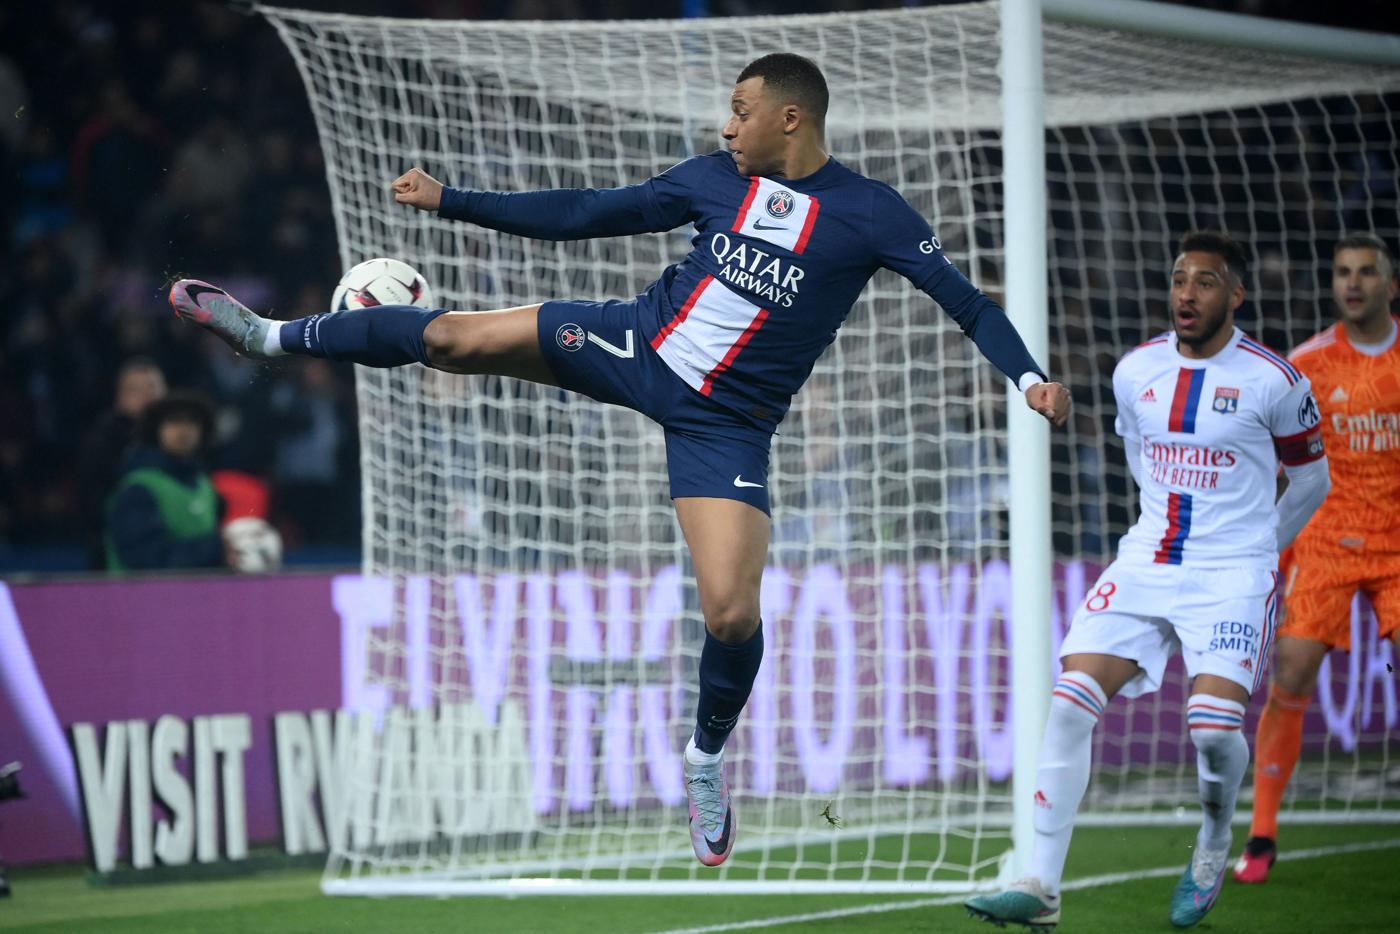 PSG - Lyon - 0:1. French Championship, 29th round. Match review, statistics